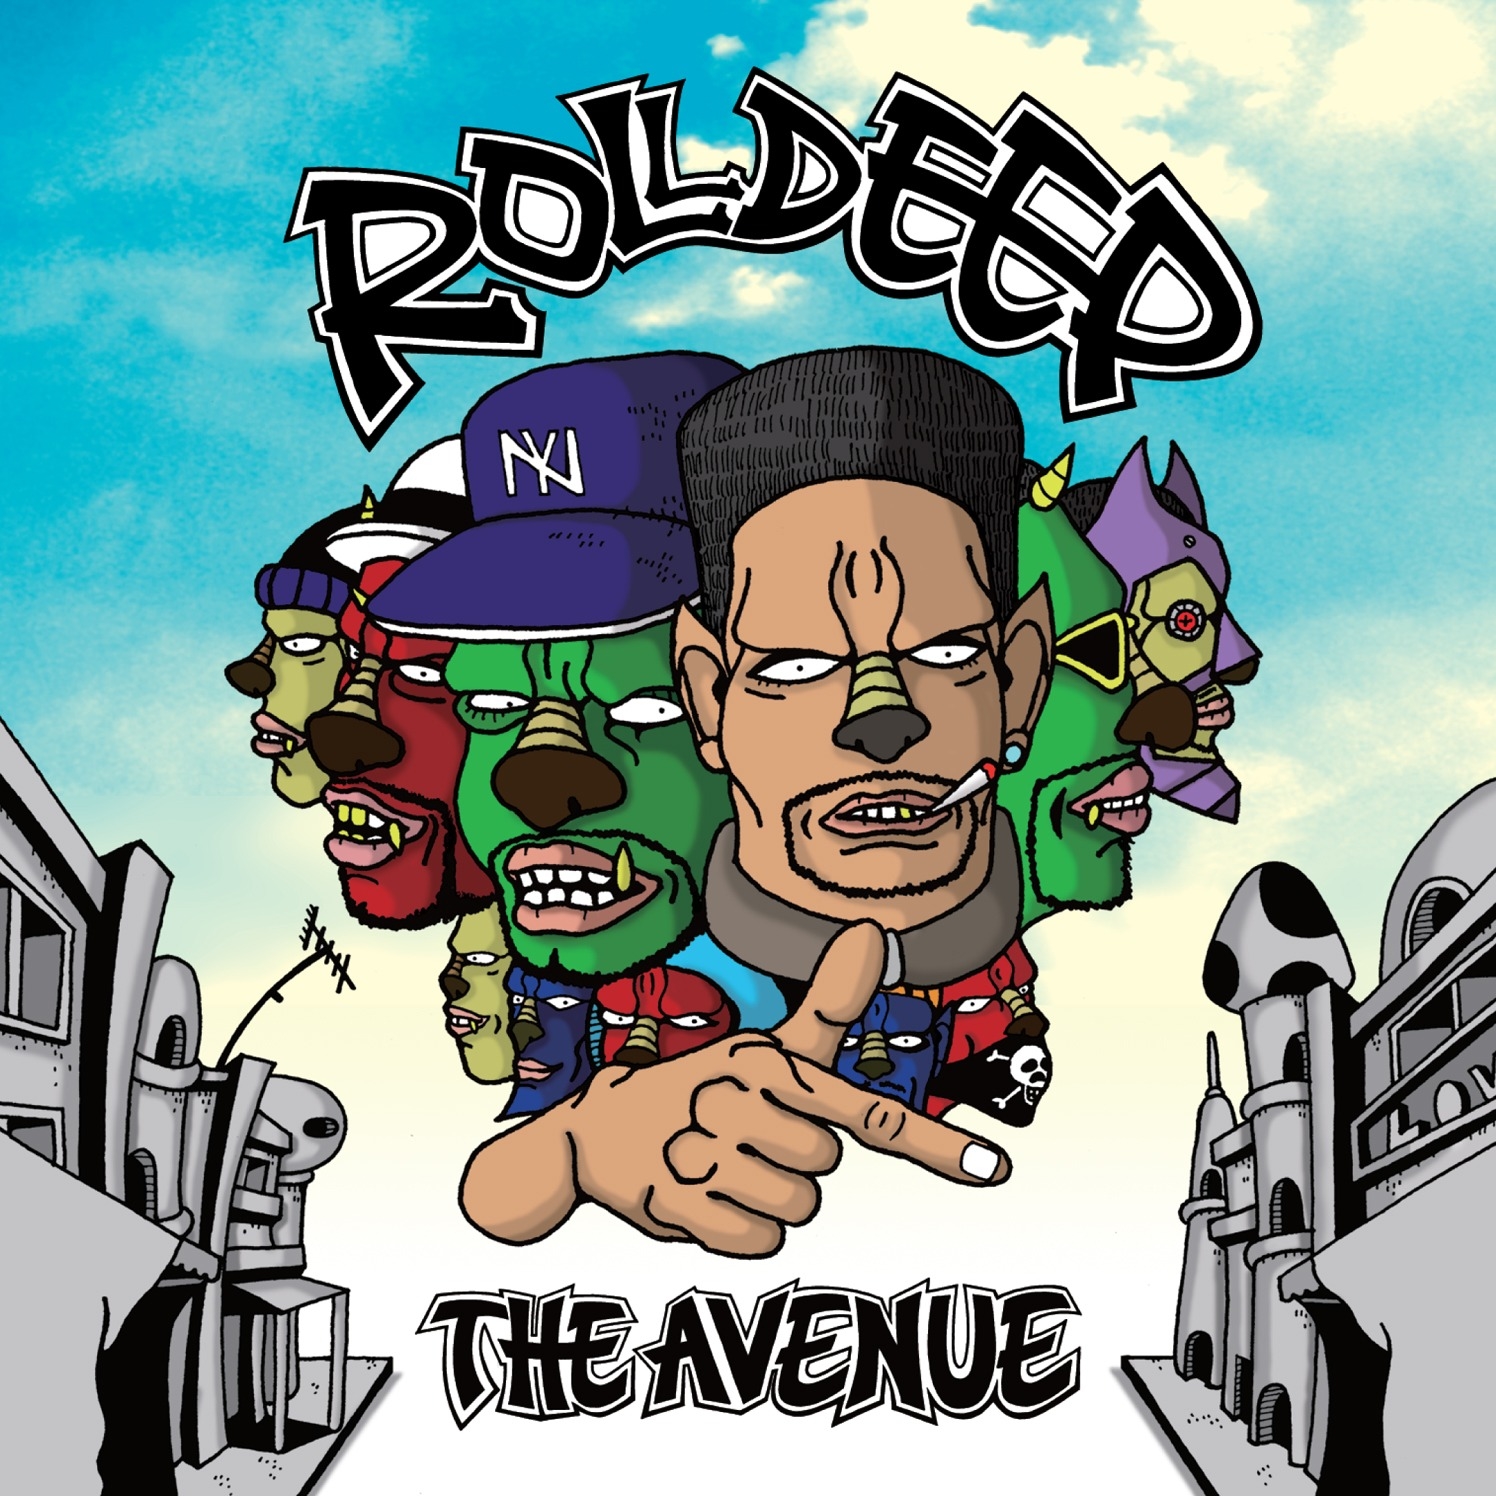 Roll Deep The Avenue